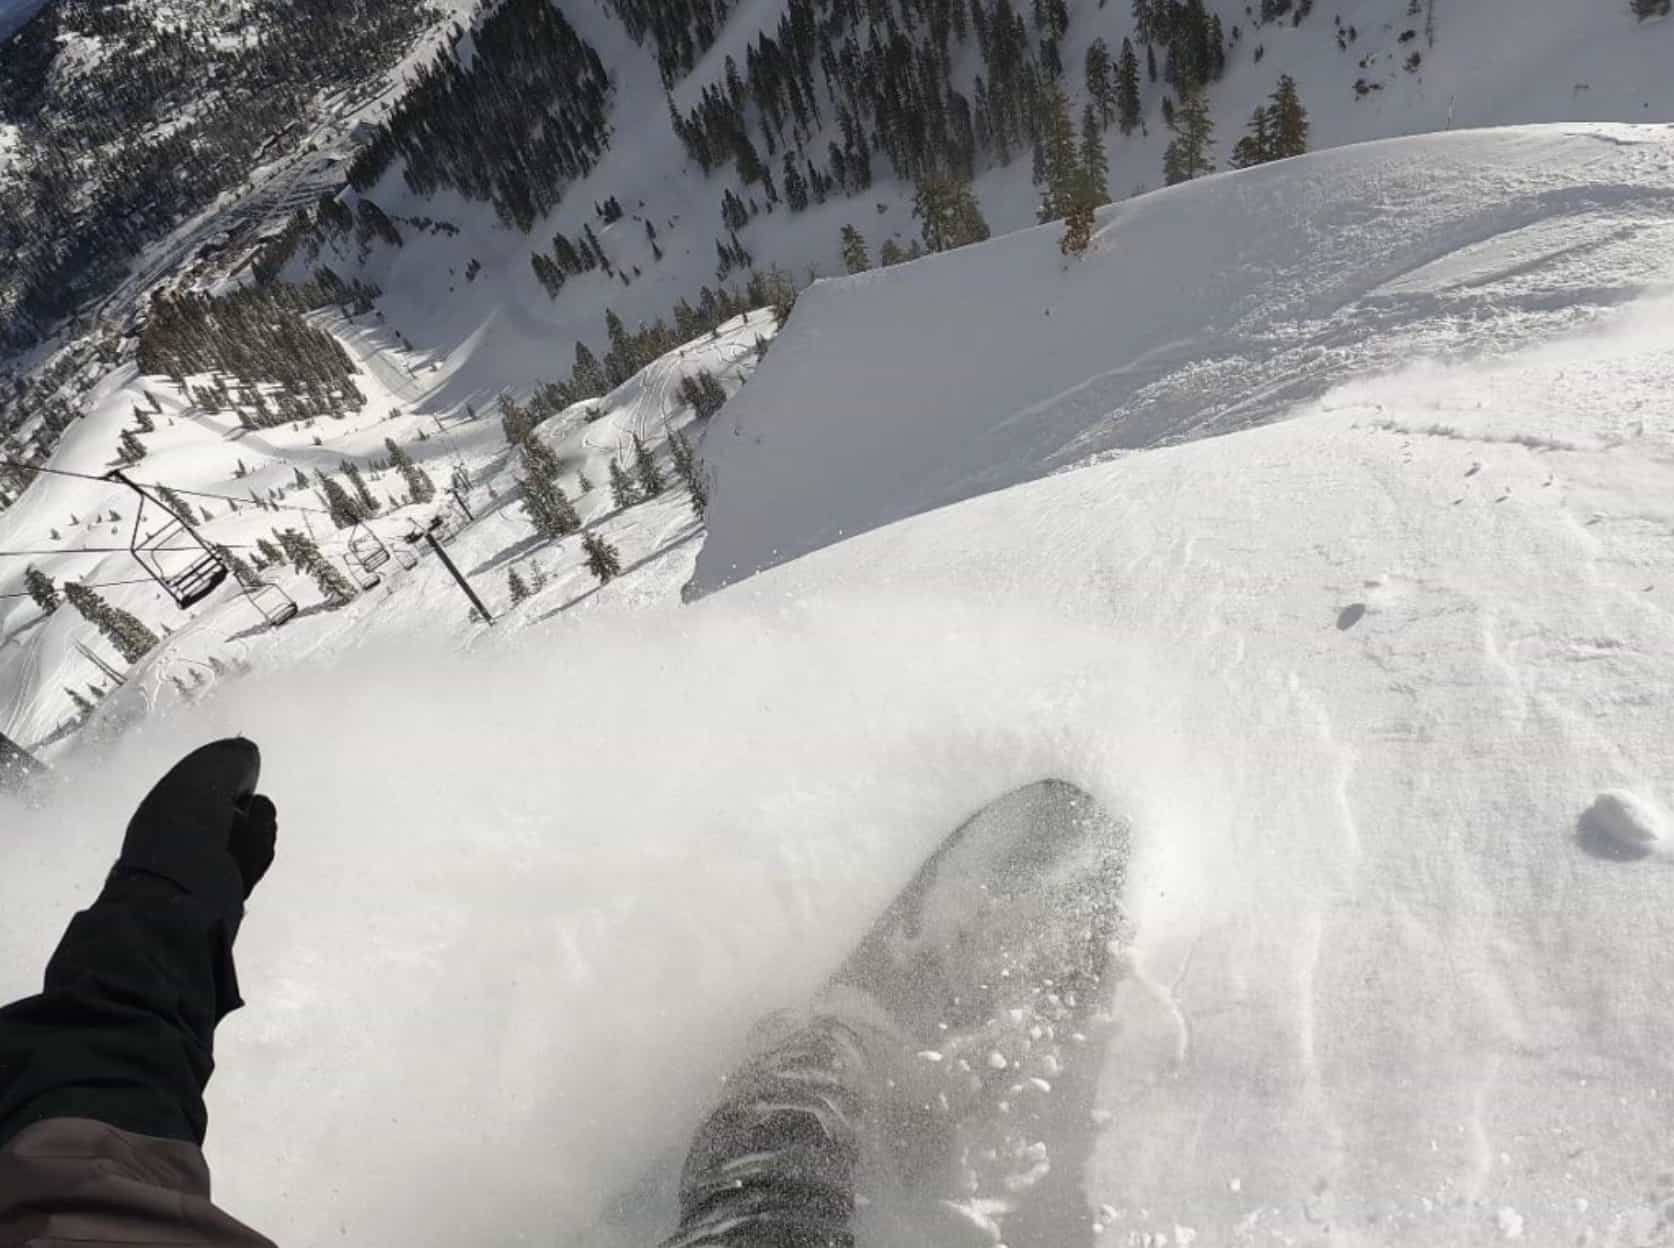 Snowboarder in fresh deep powder.